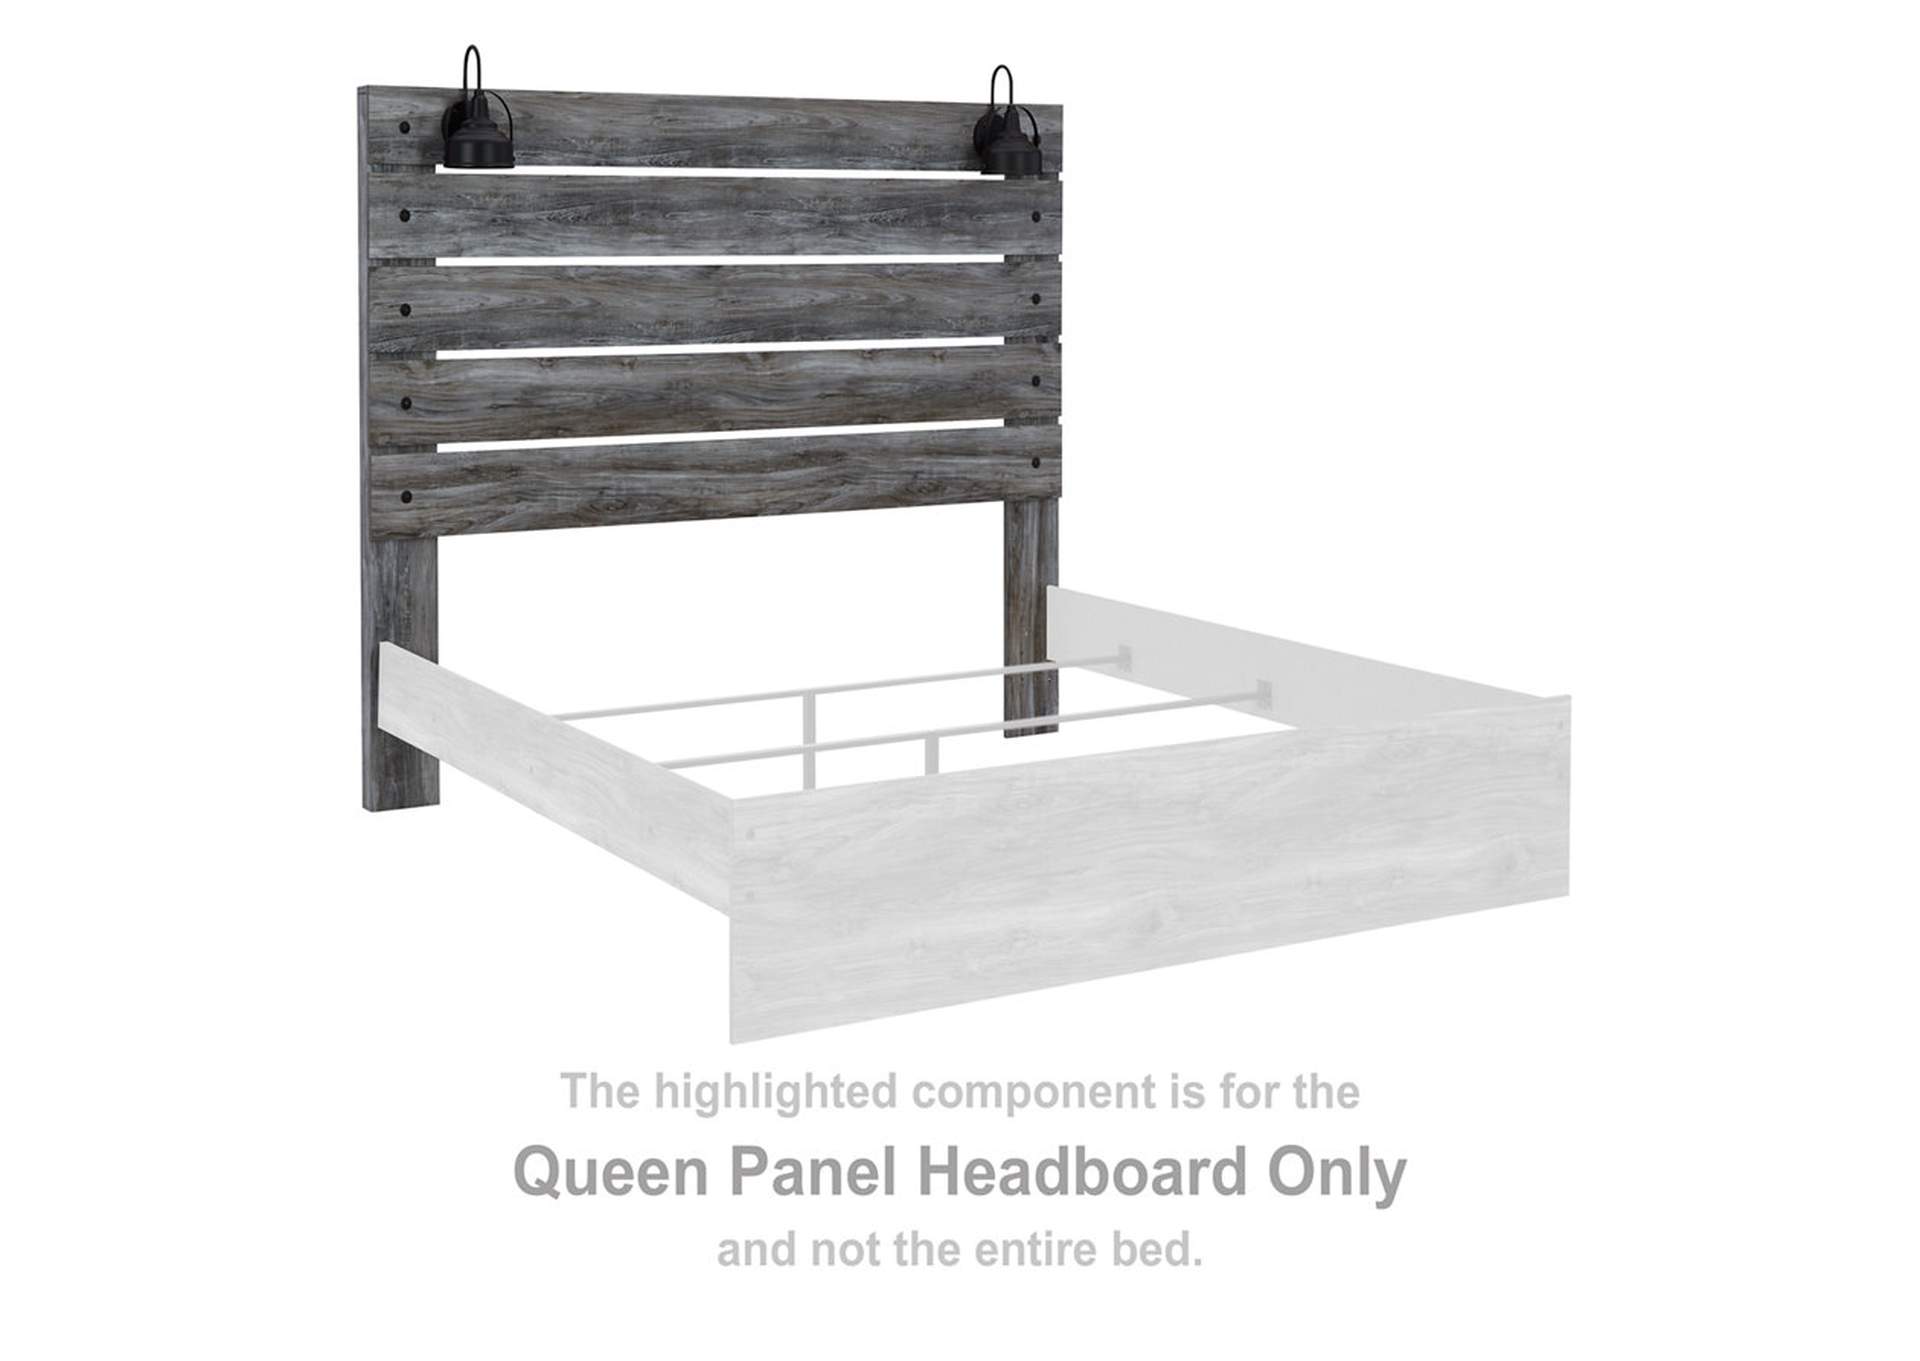 Baystorm Queen Panel Headboard,Signature Design By Ashley